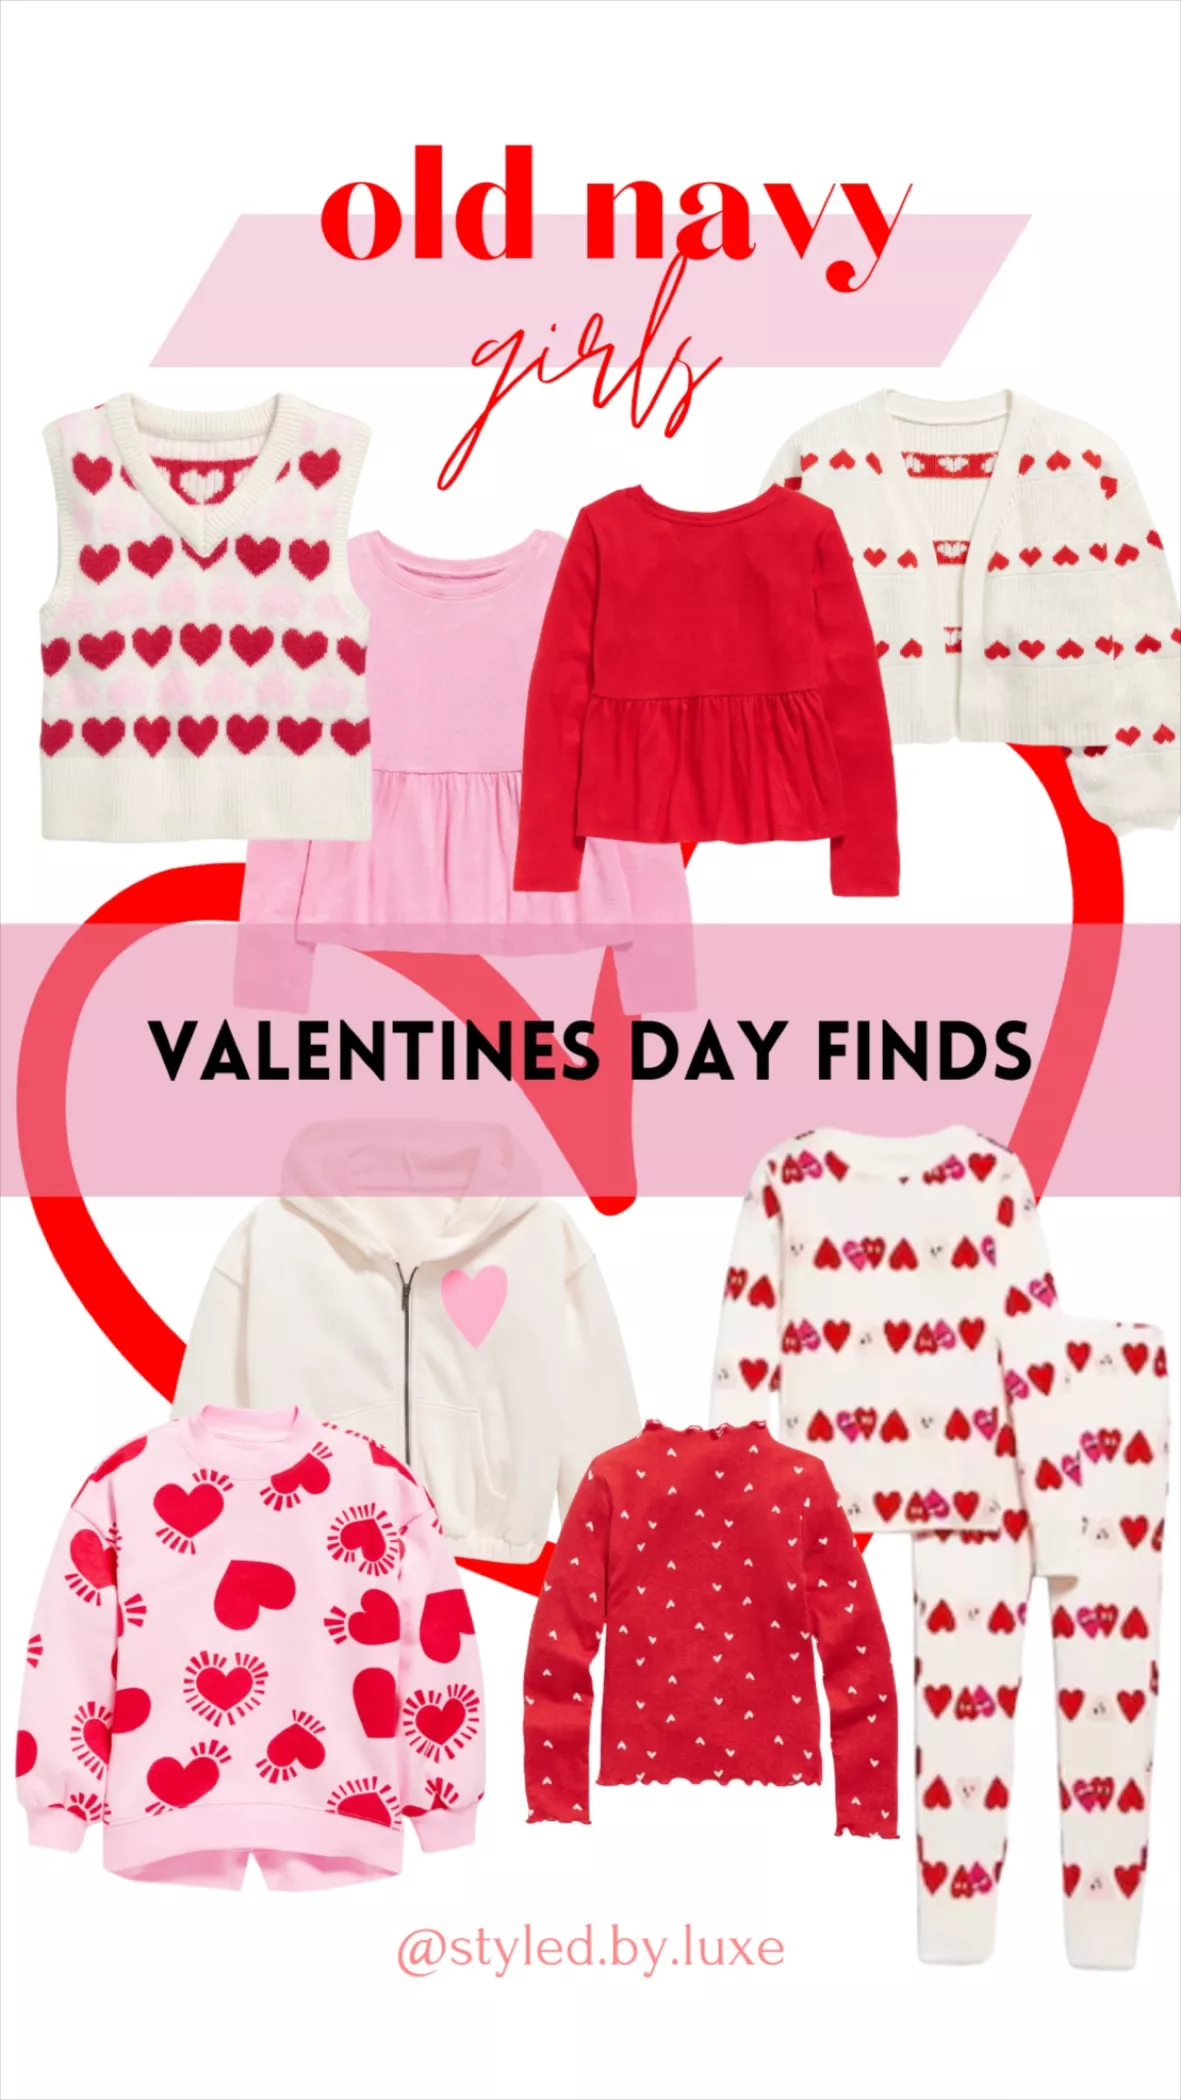 Girls Heart Print Knit Leggings - Valentine Cutie